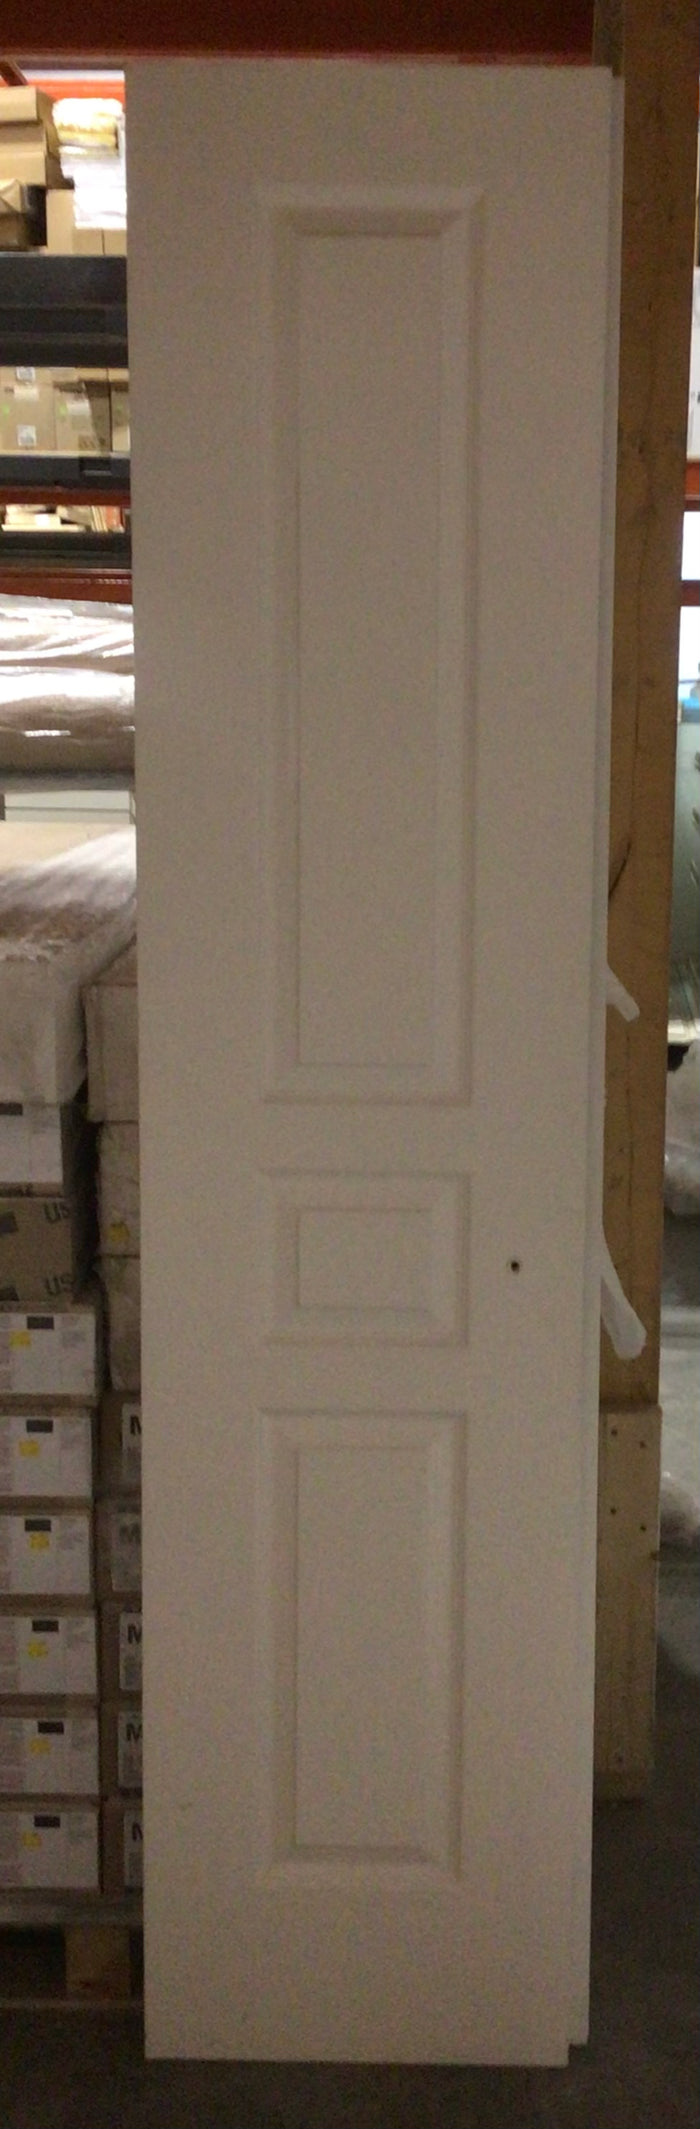 18” x 80” White Long Closet Door